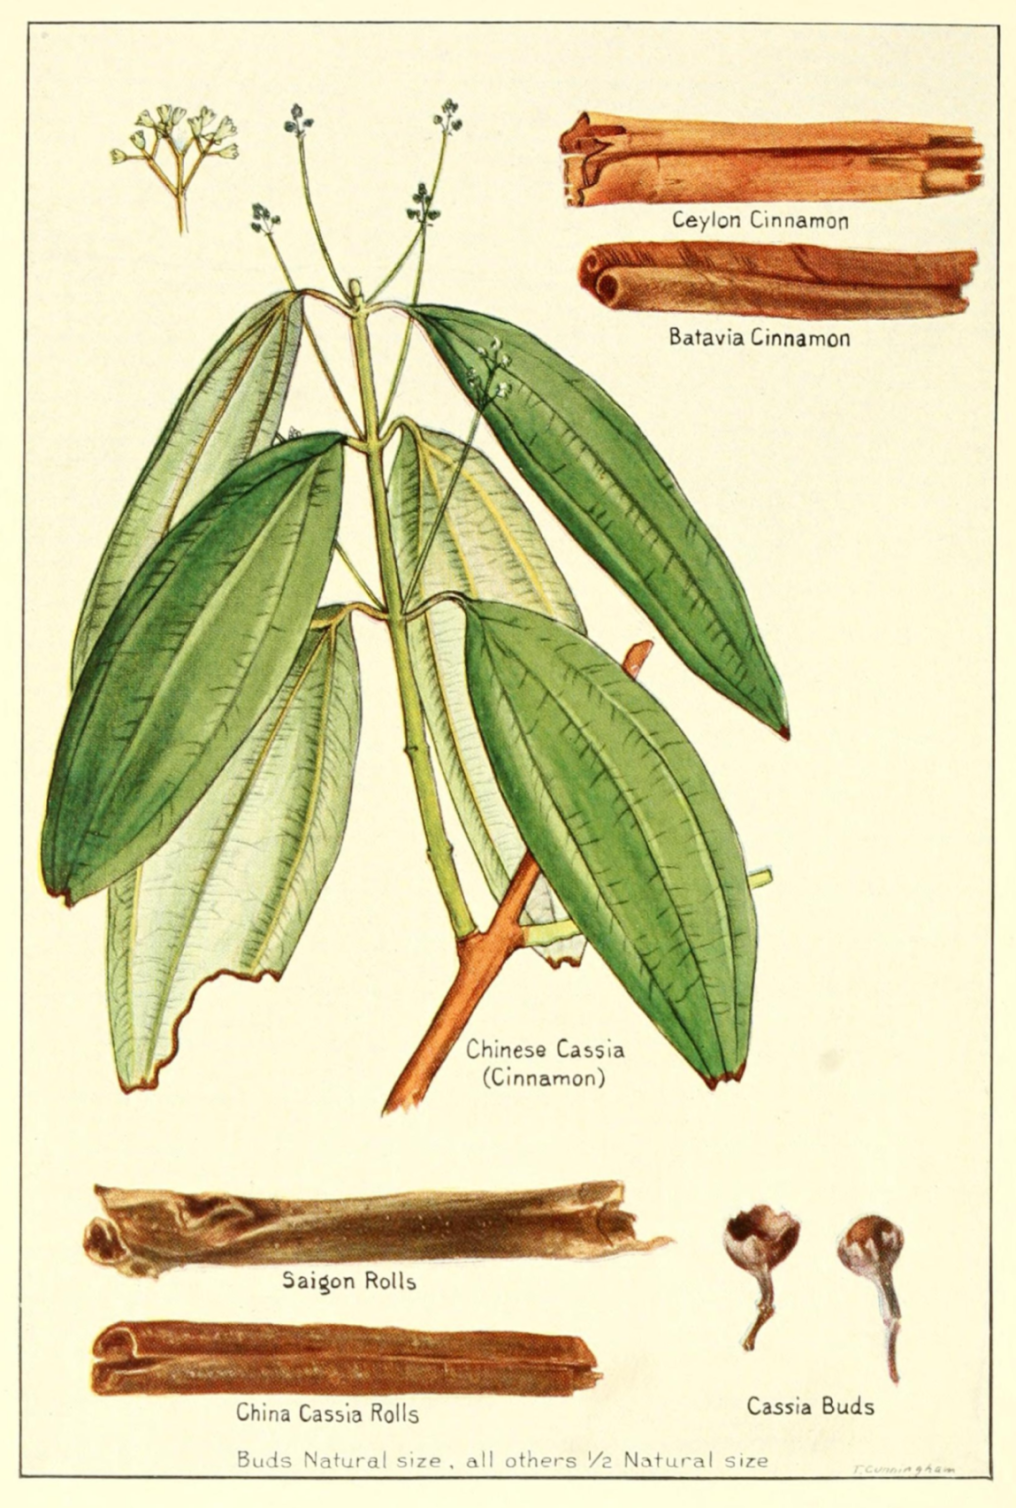 Illustration of different types of cinnamon